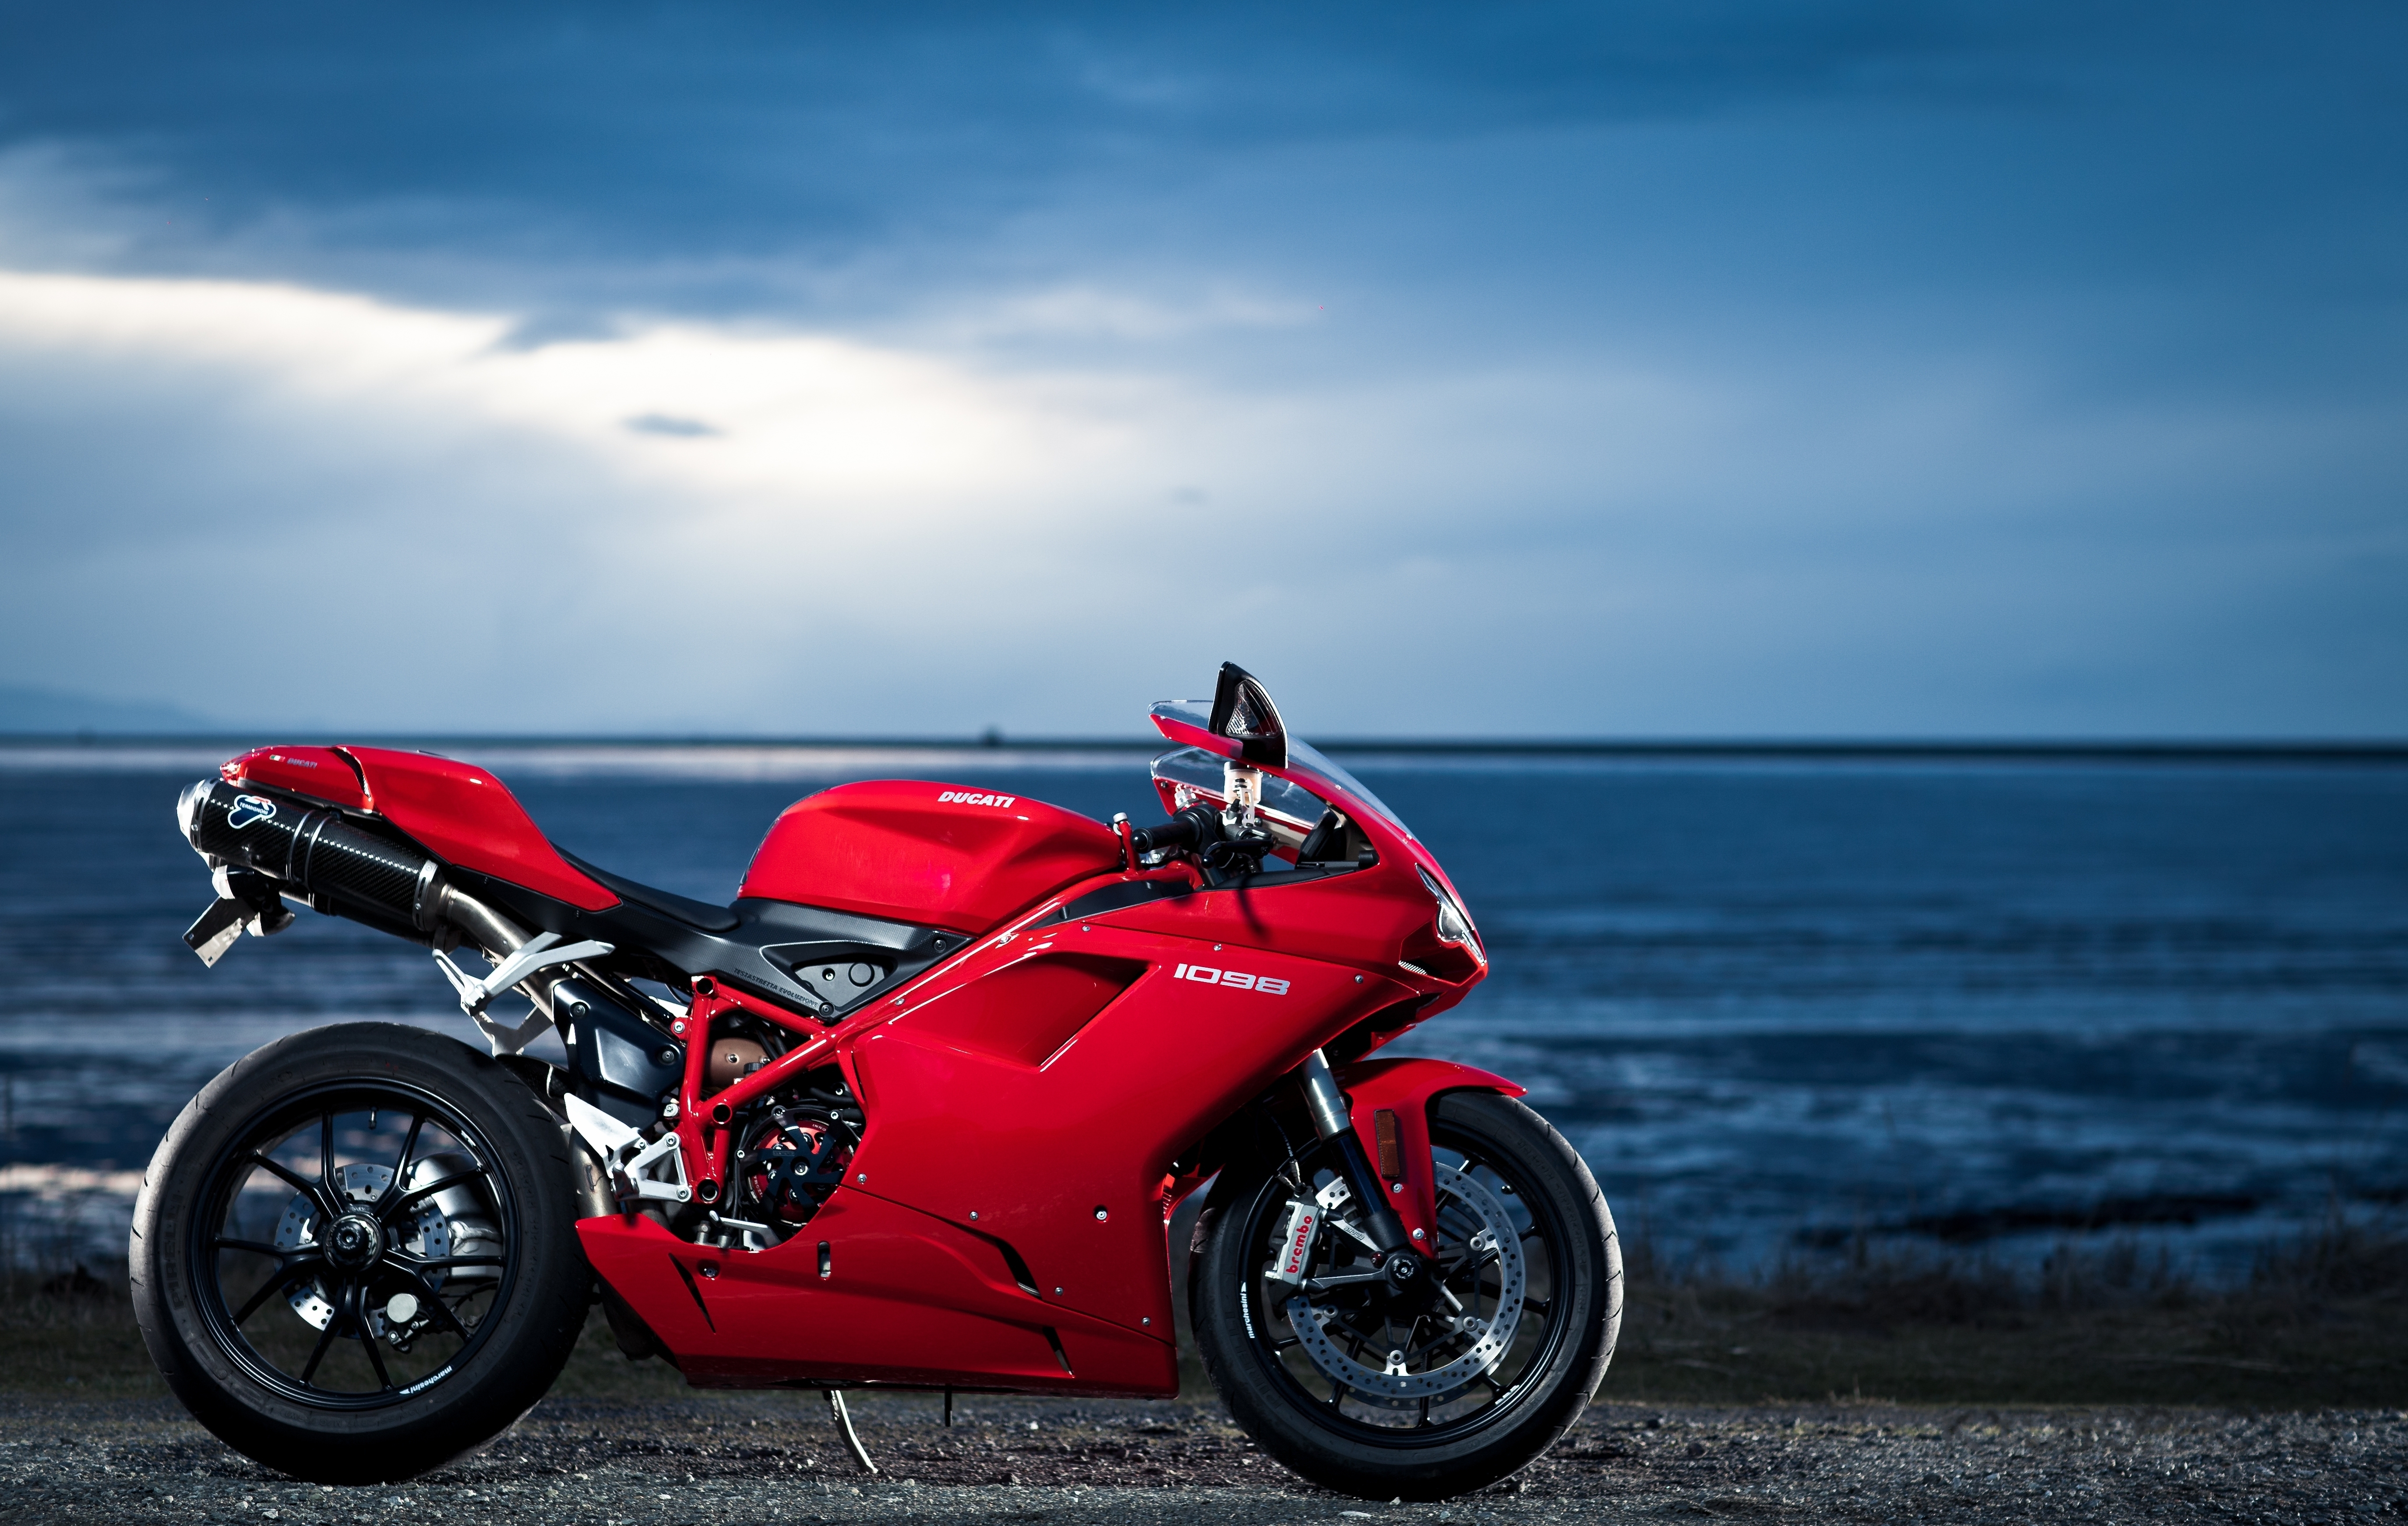 ducati, motorcycle, red, sea, motorcycles, 1098